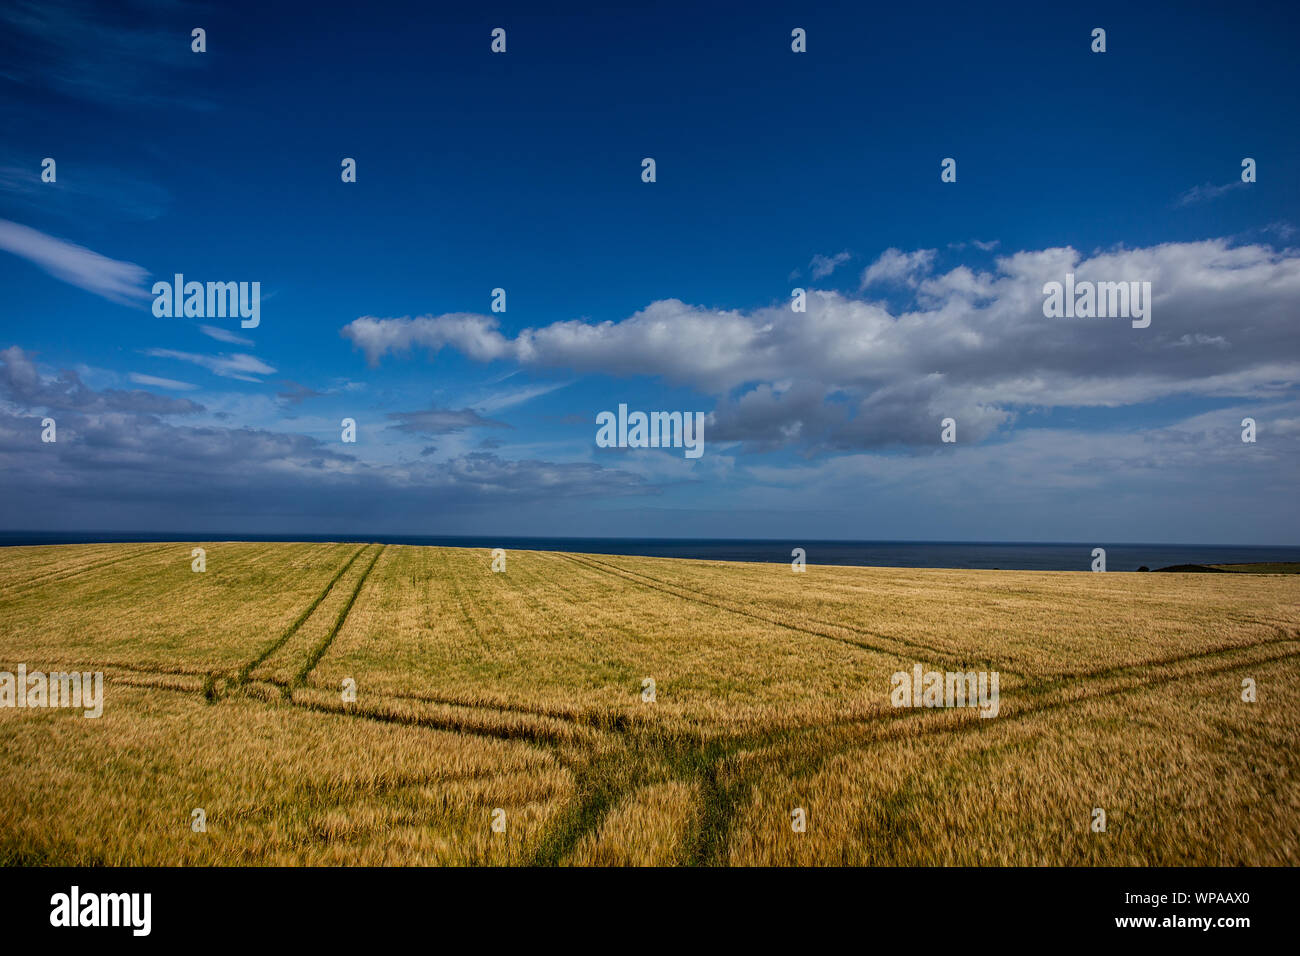 cornfield with blue sky Stock Photo